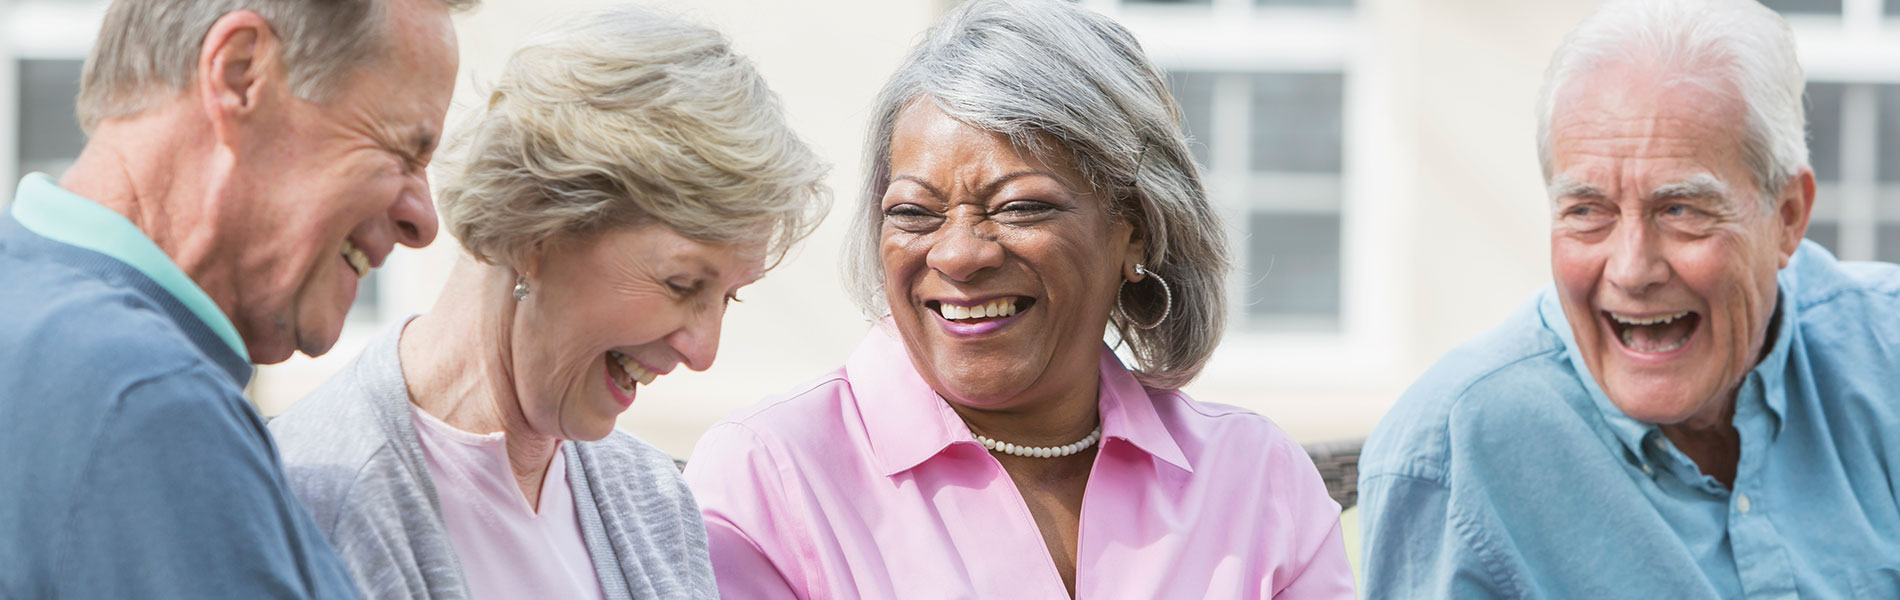 Older women talking and laughing